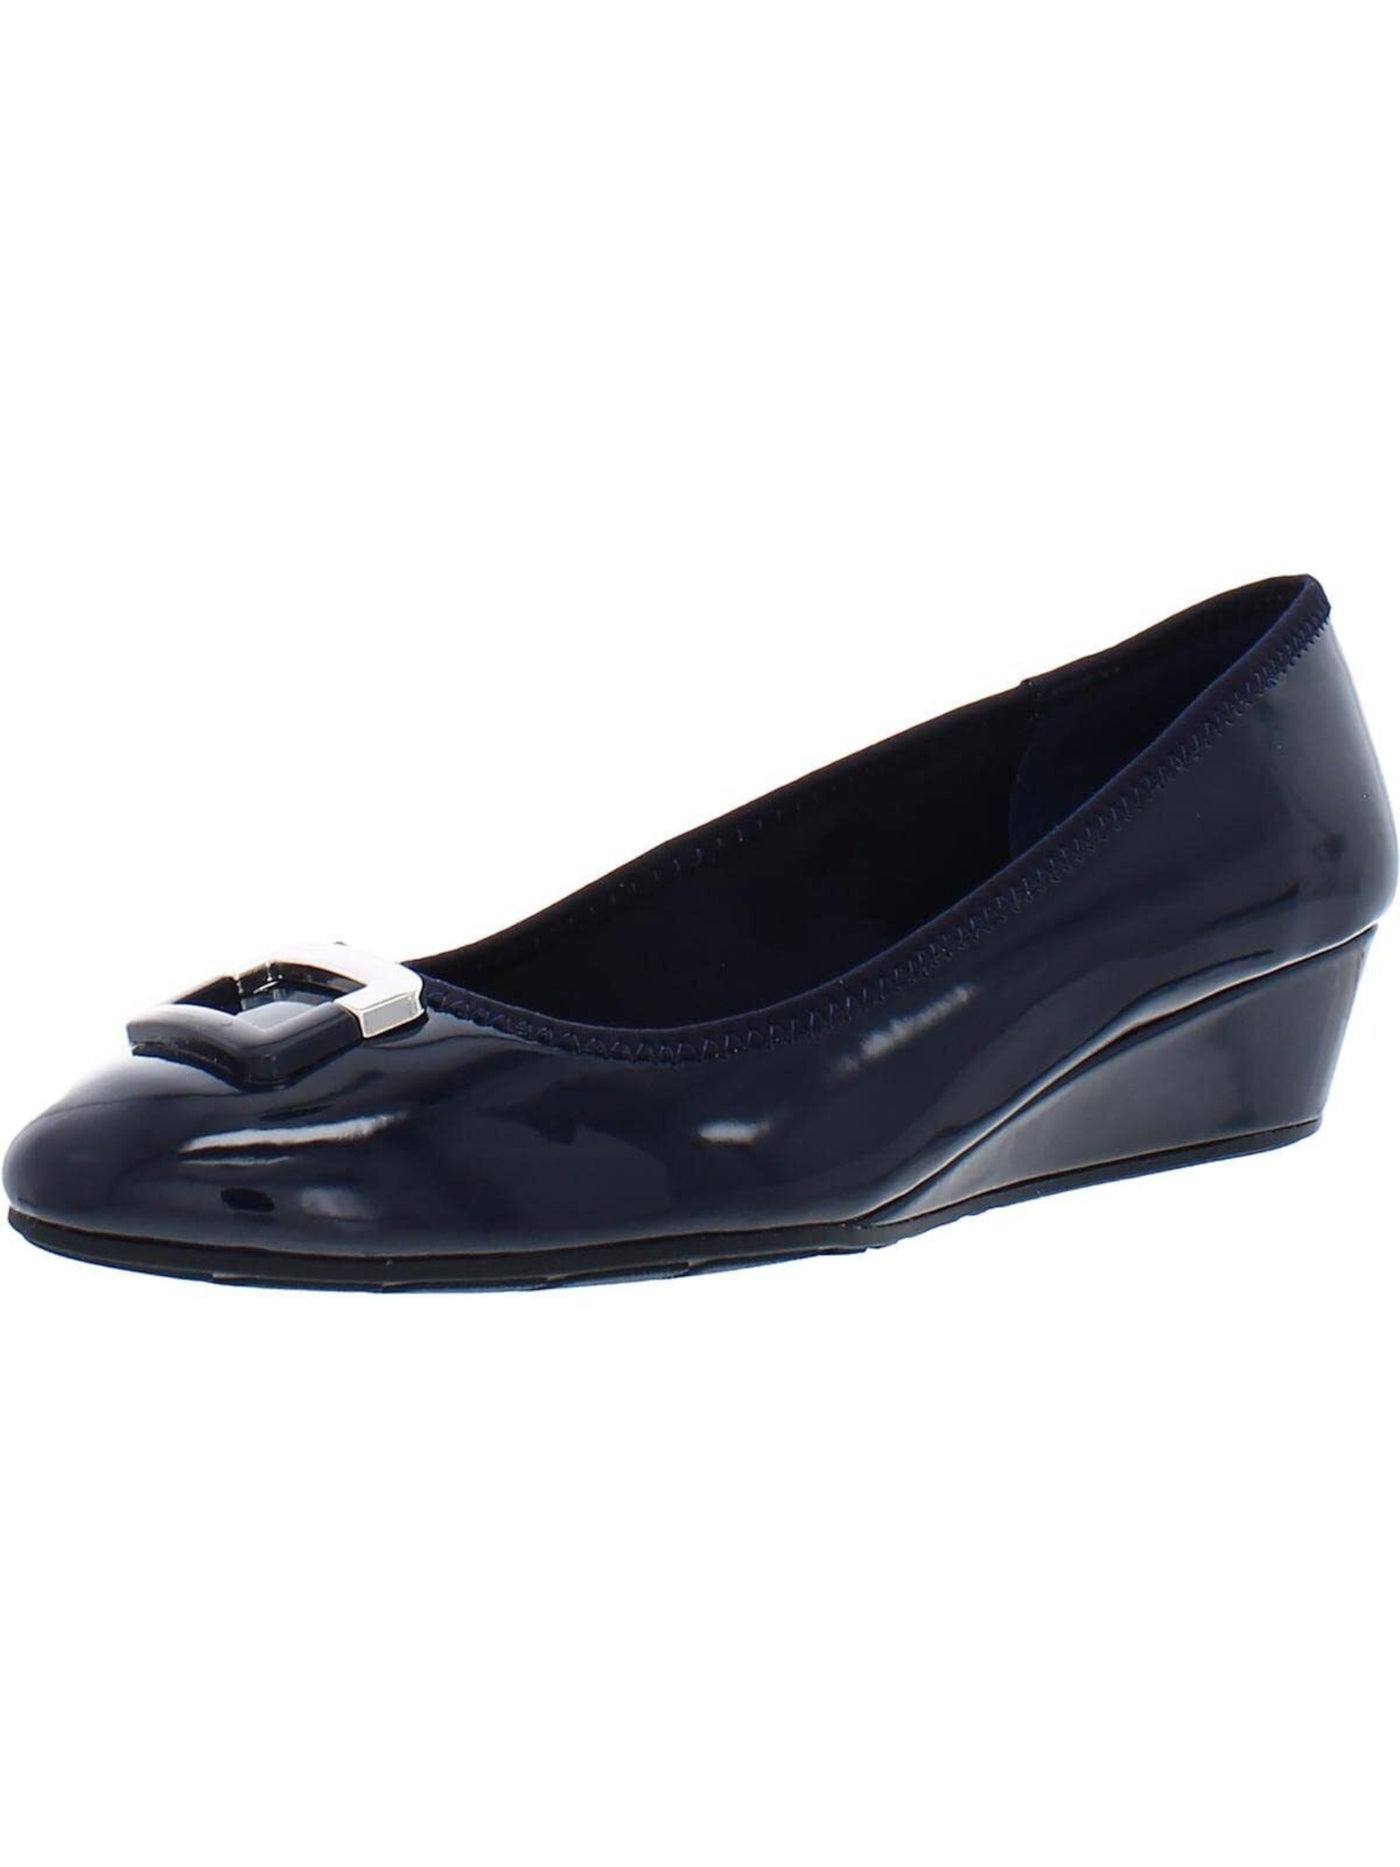 BANDOLINO Womens Navy Metallic Hardware Padded Tad Almond Toe Wedge Slip On Dress Pumps Shoes 5 M